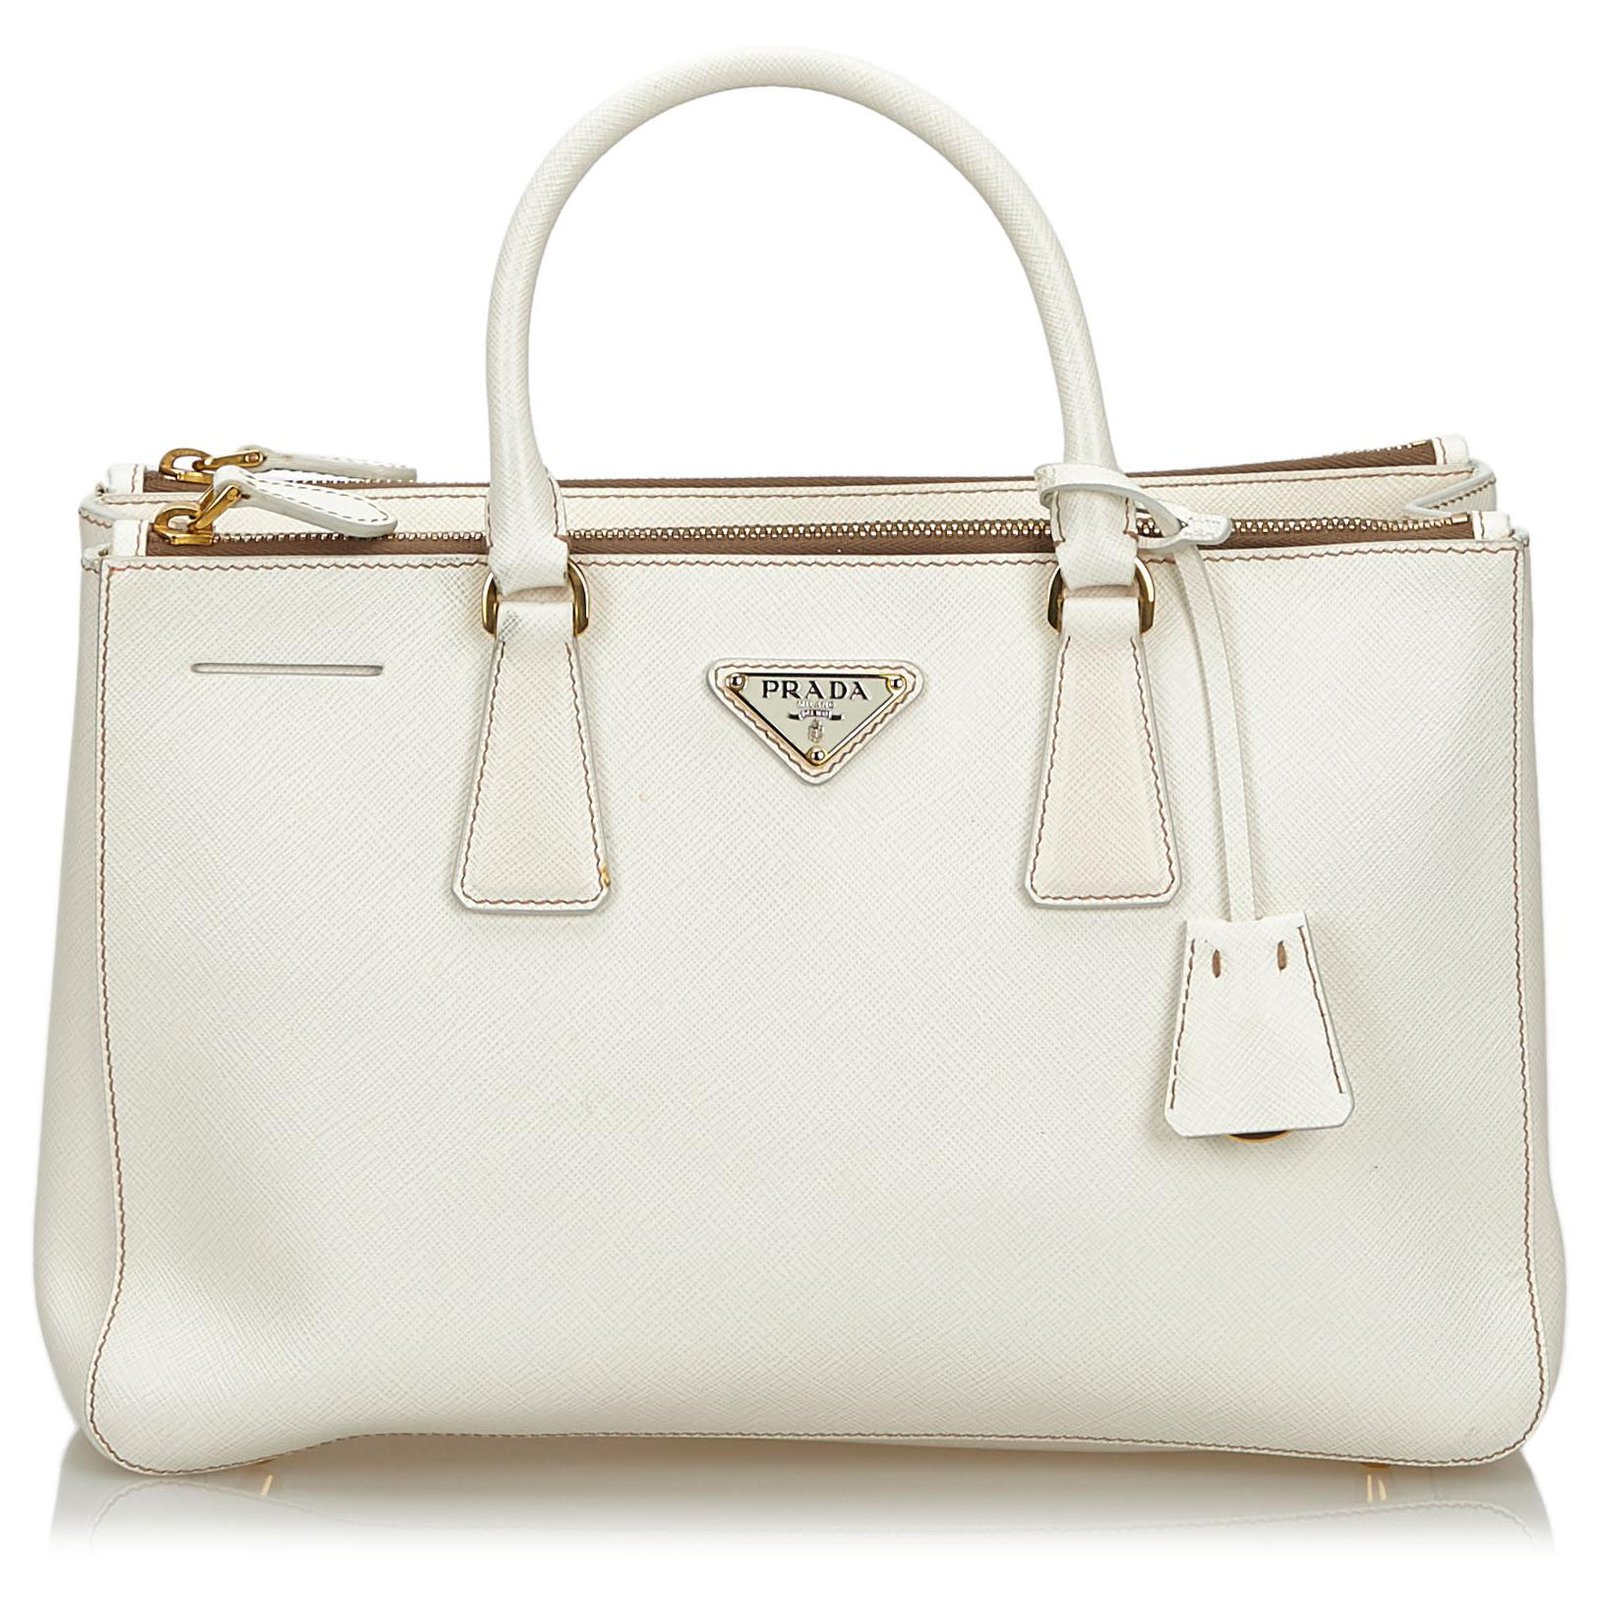 prada handbags white